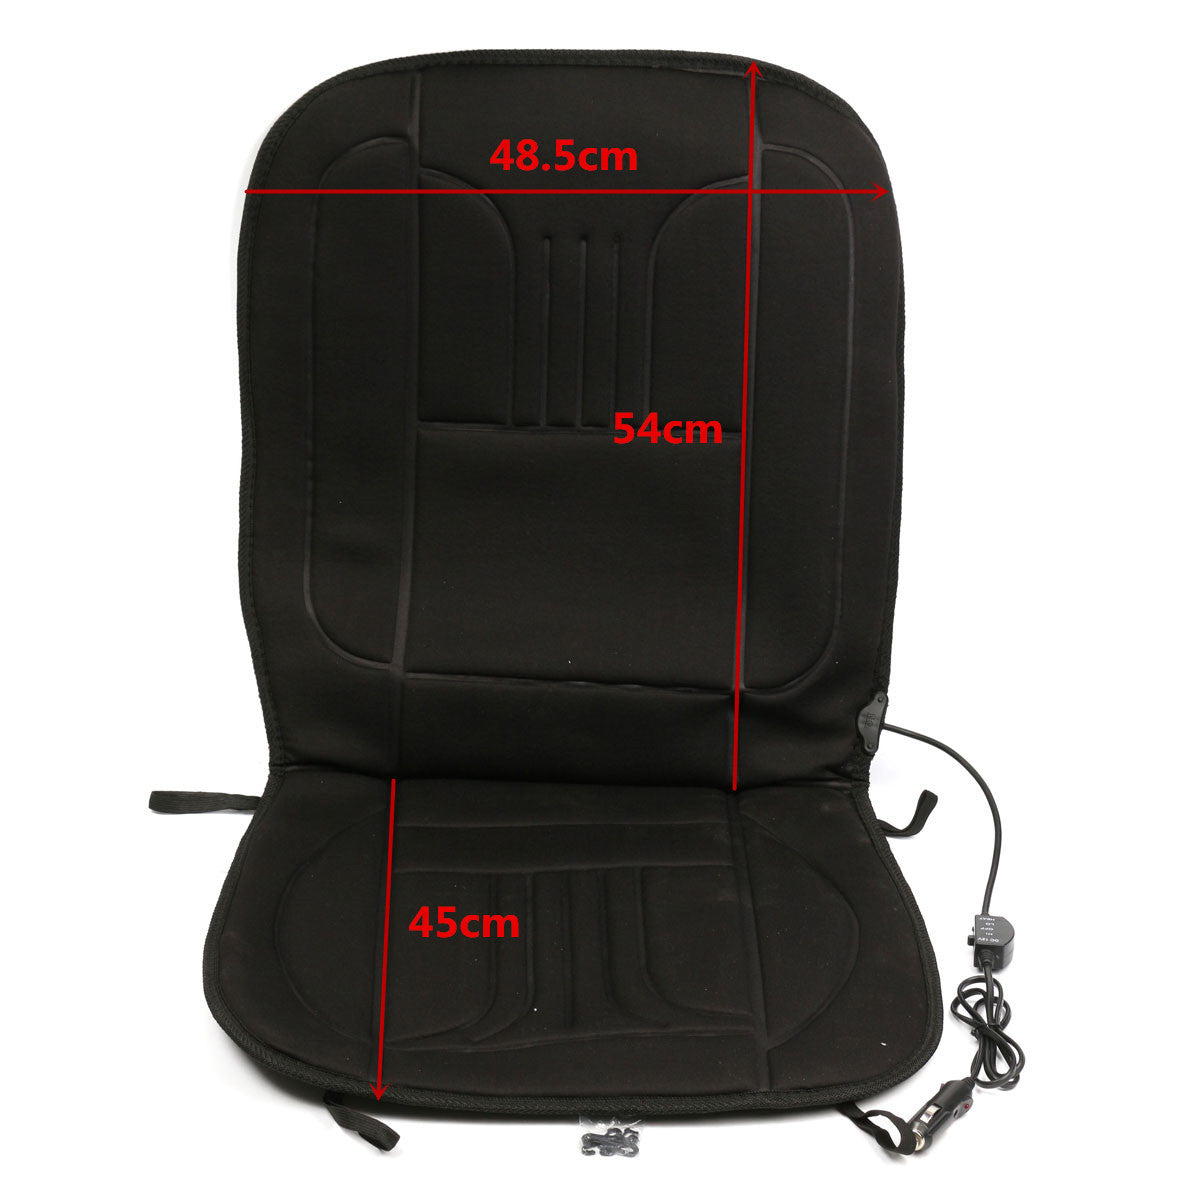 12V Black Car Van Front Seat Cover Heating Cushion Heated Pad Winter Auto Interior Warmer - Auto GoShop